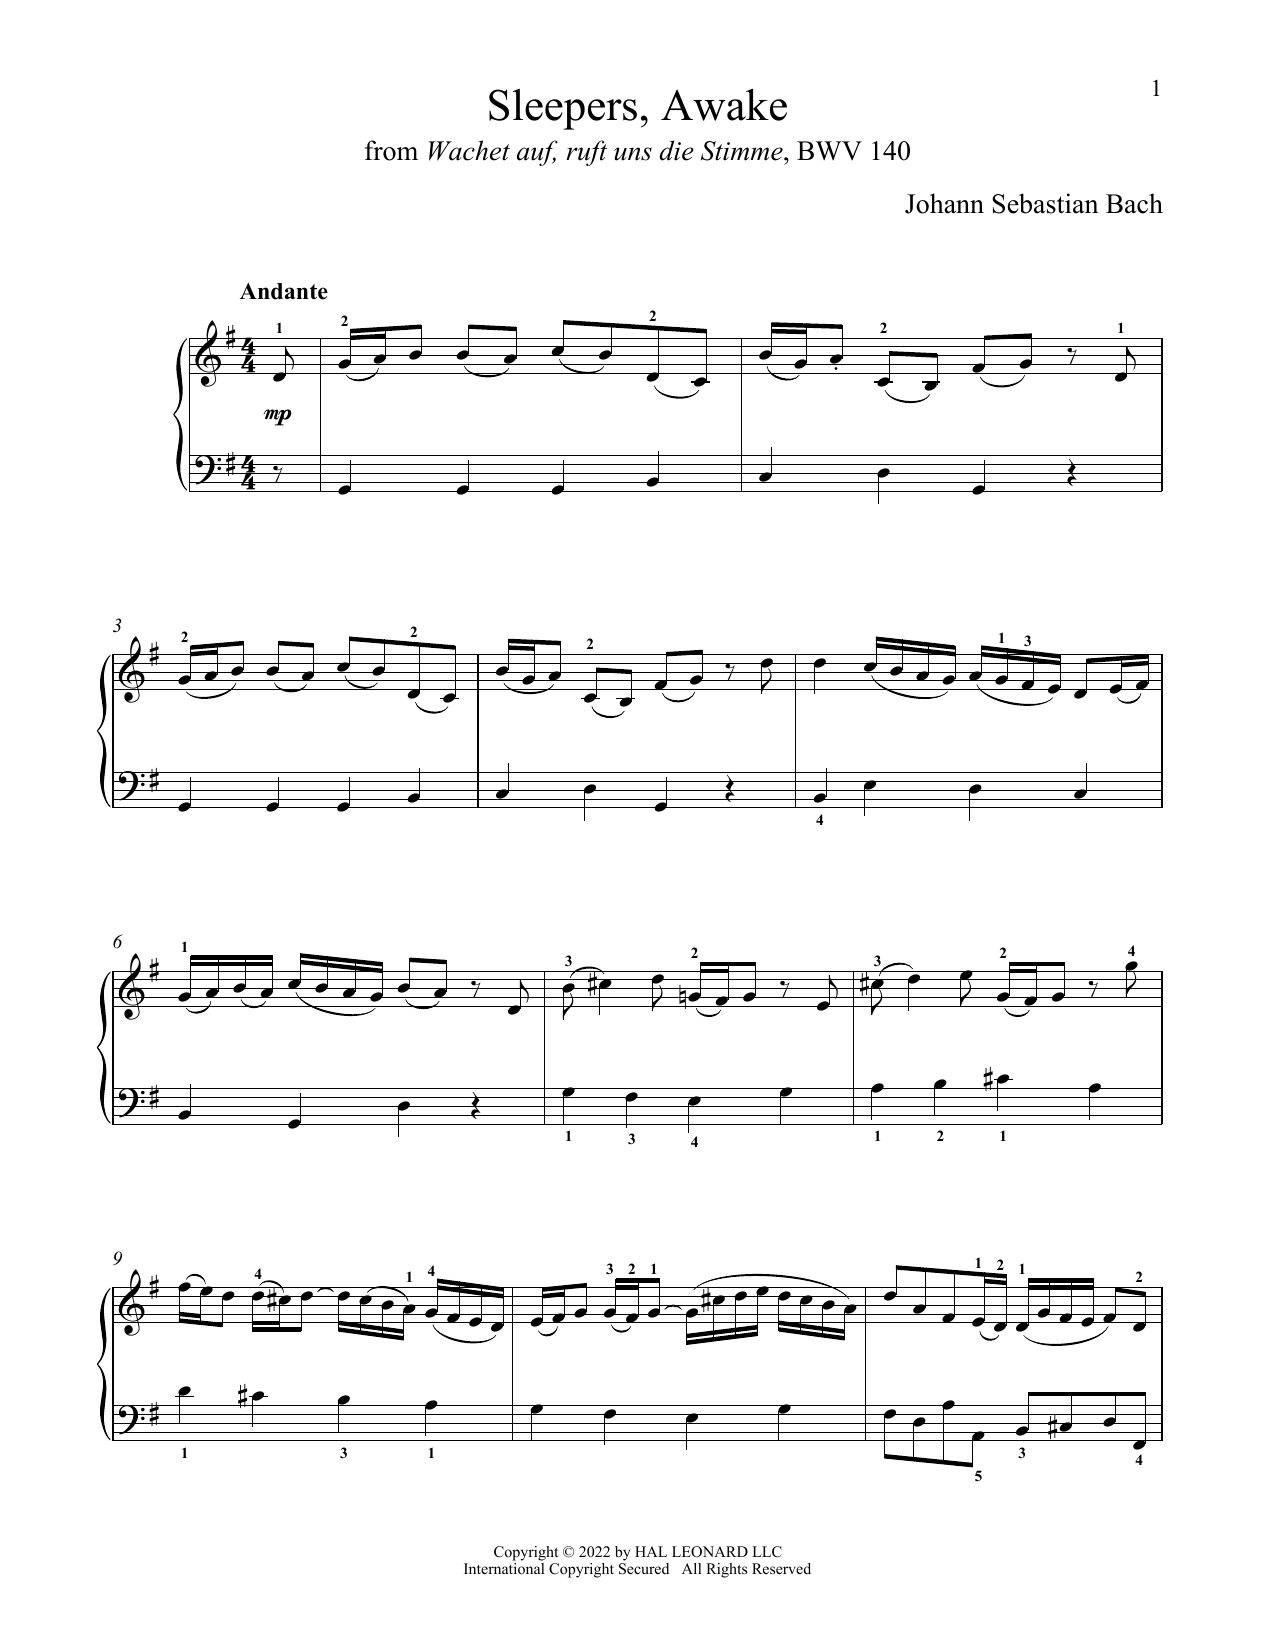 Download Johann Sebastian Bach Sleepers, Awake, BWV 140 (Wachet Auf) Sheet Music and learn how to play Piano Solo PDF digital score in minutes